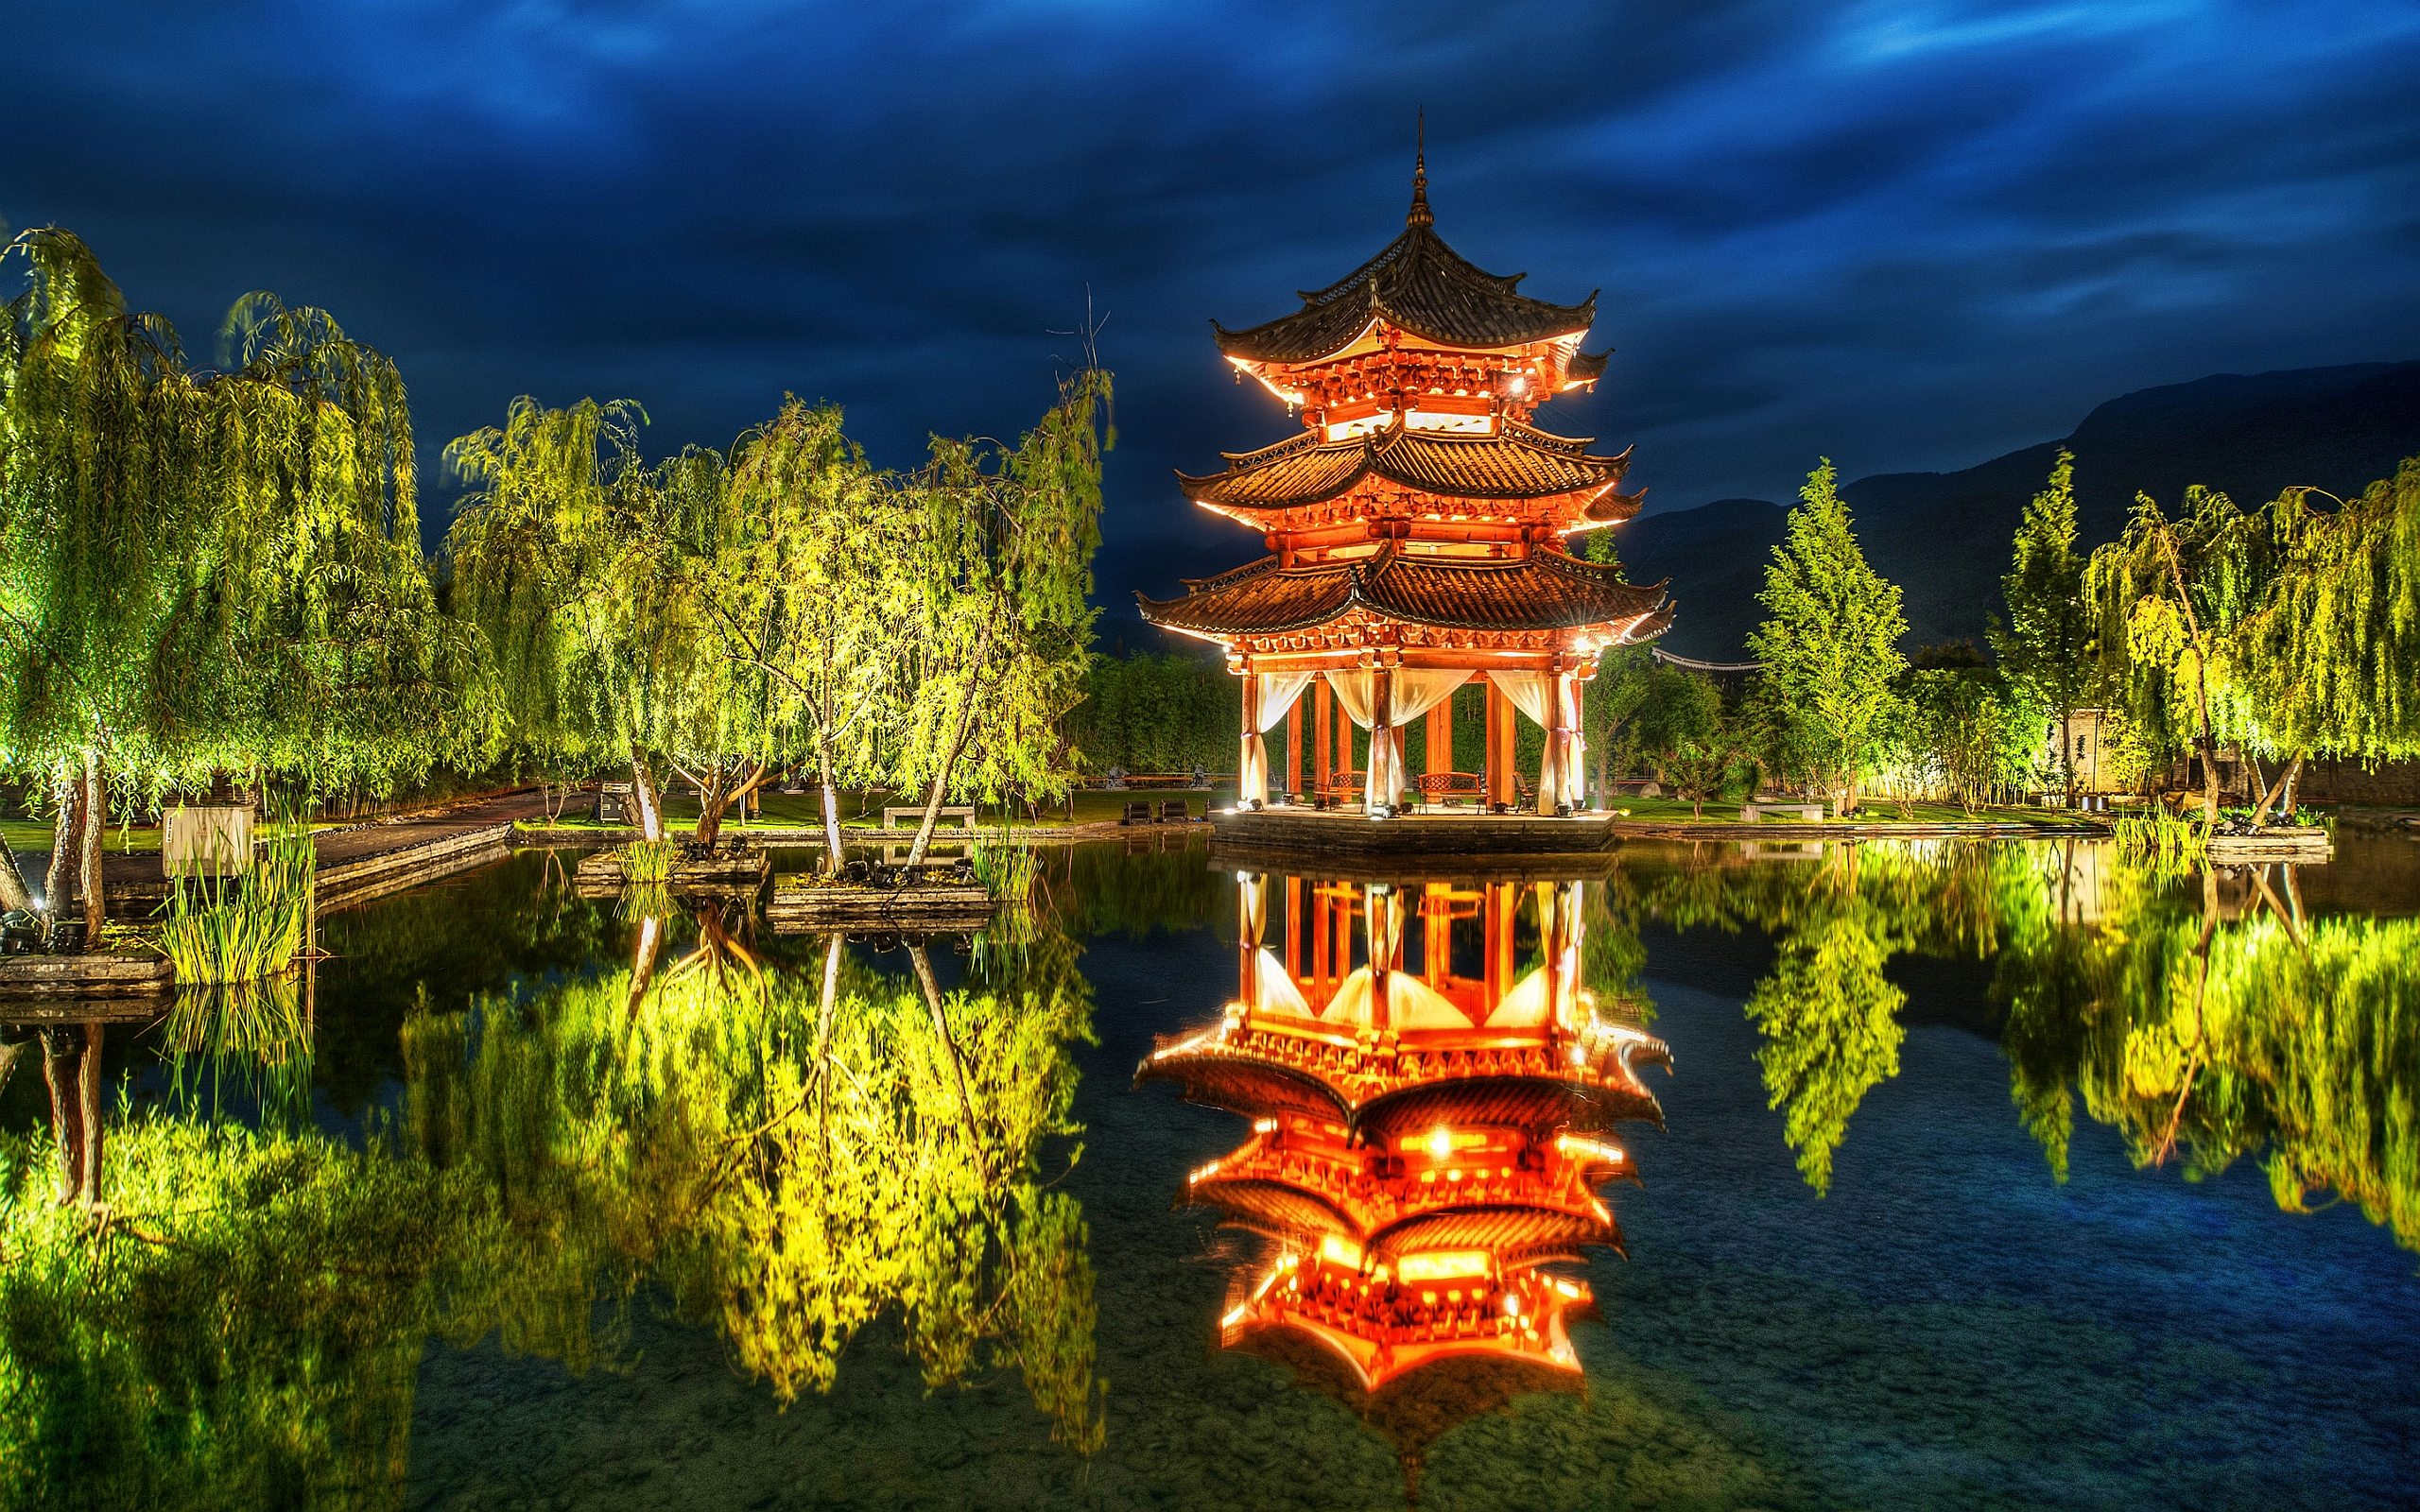 man made, pavilion, asian, evening, garden, light, pond, reflection